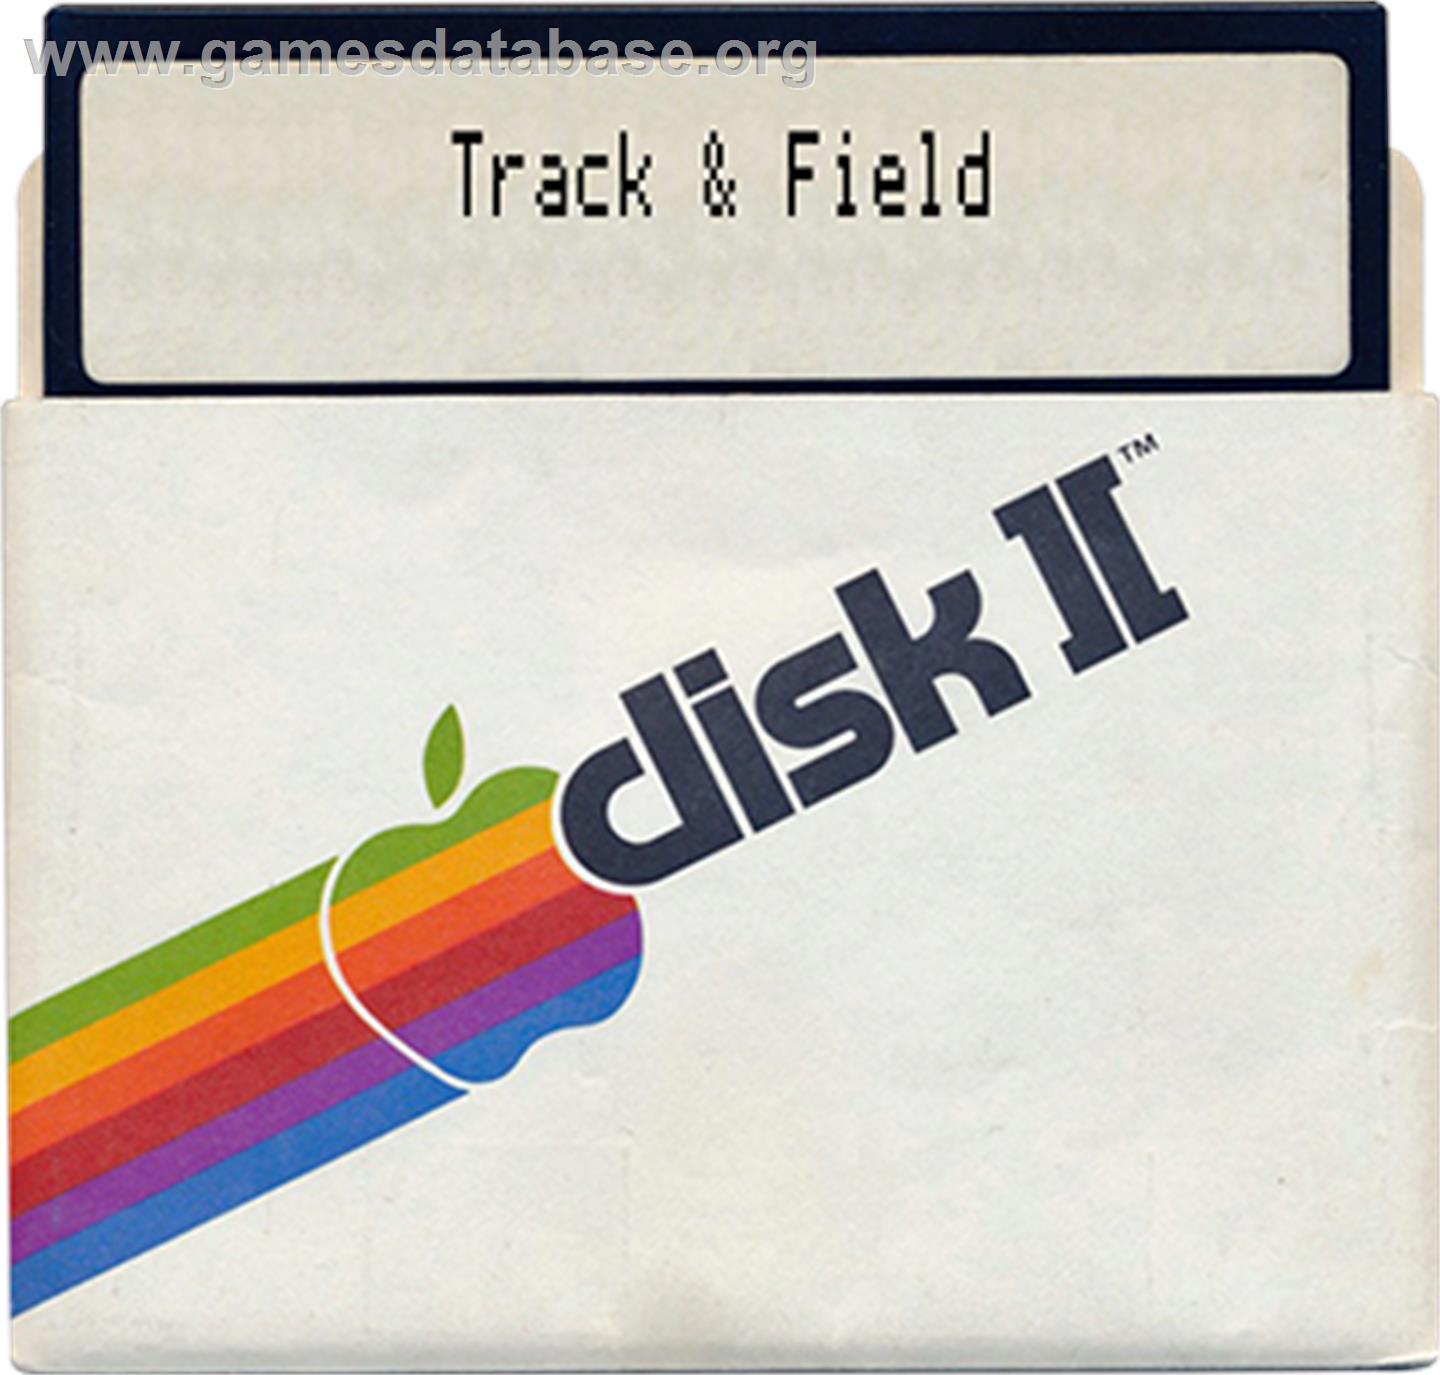 Track & Field - Apple II - Artwork - Disc